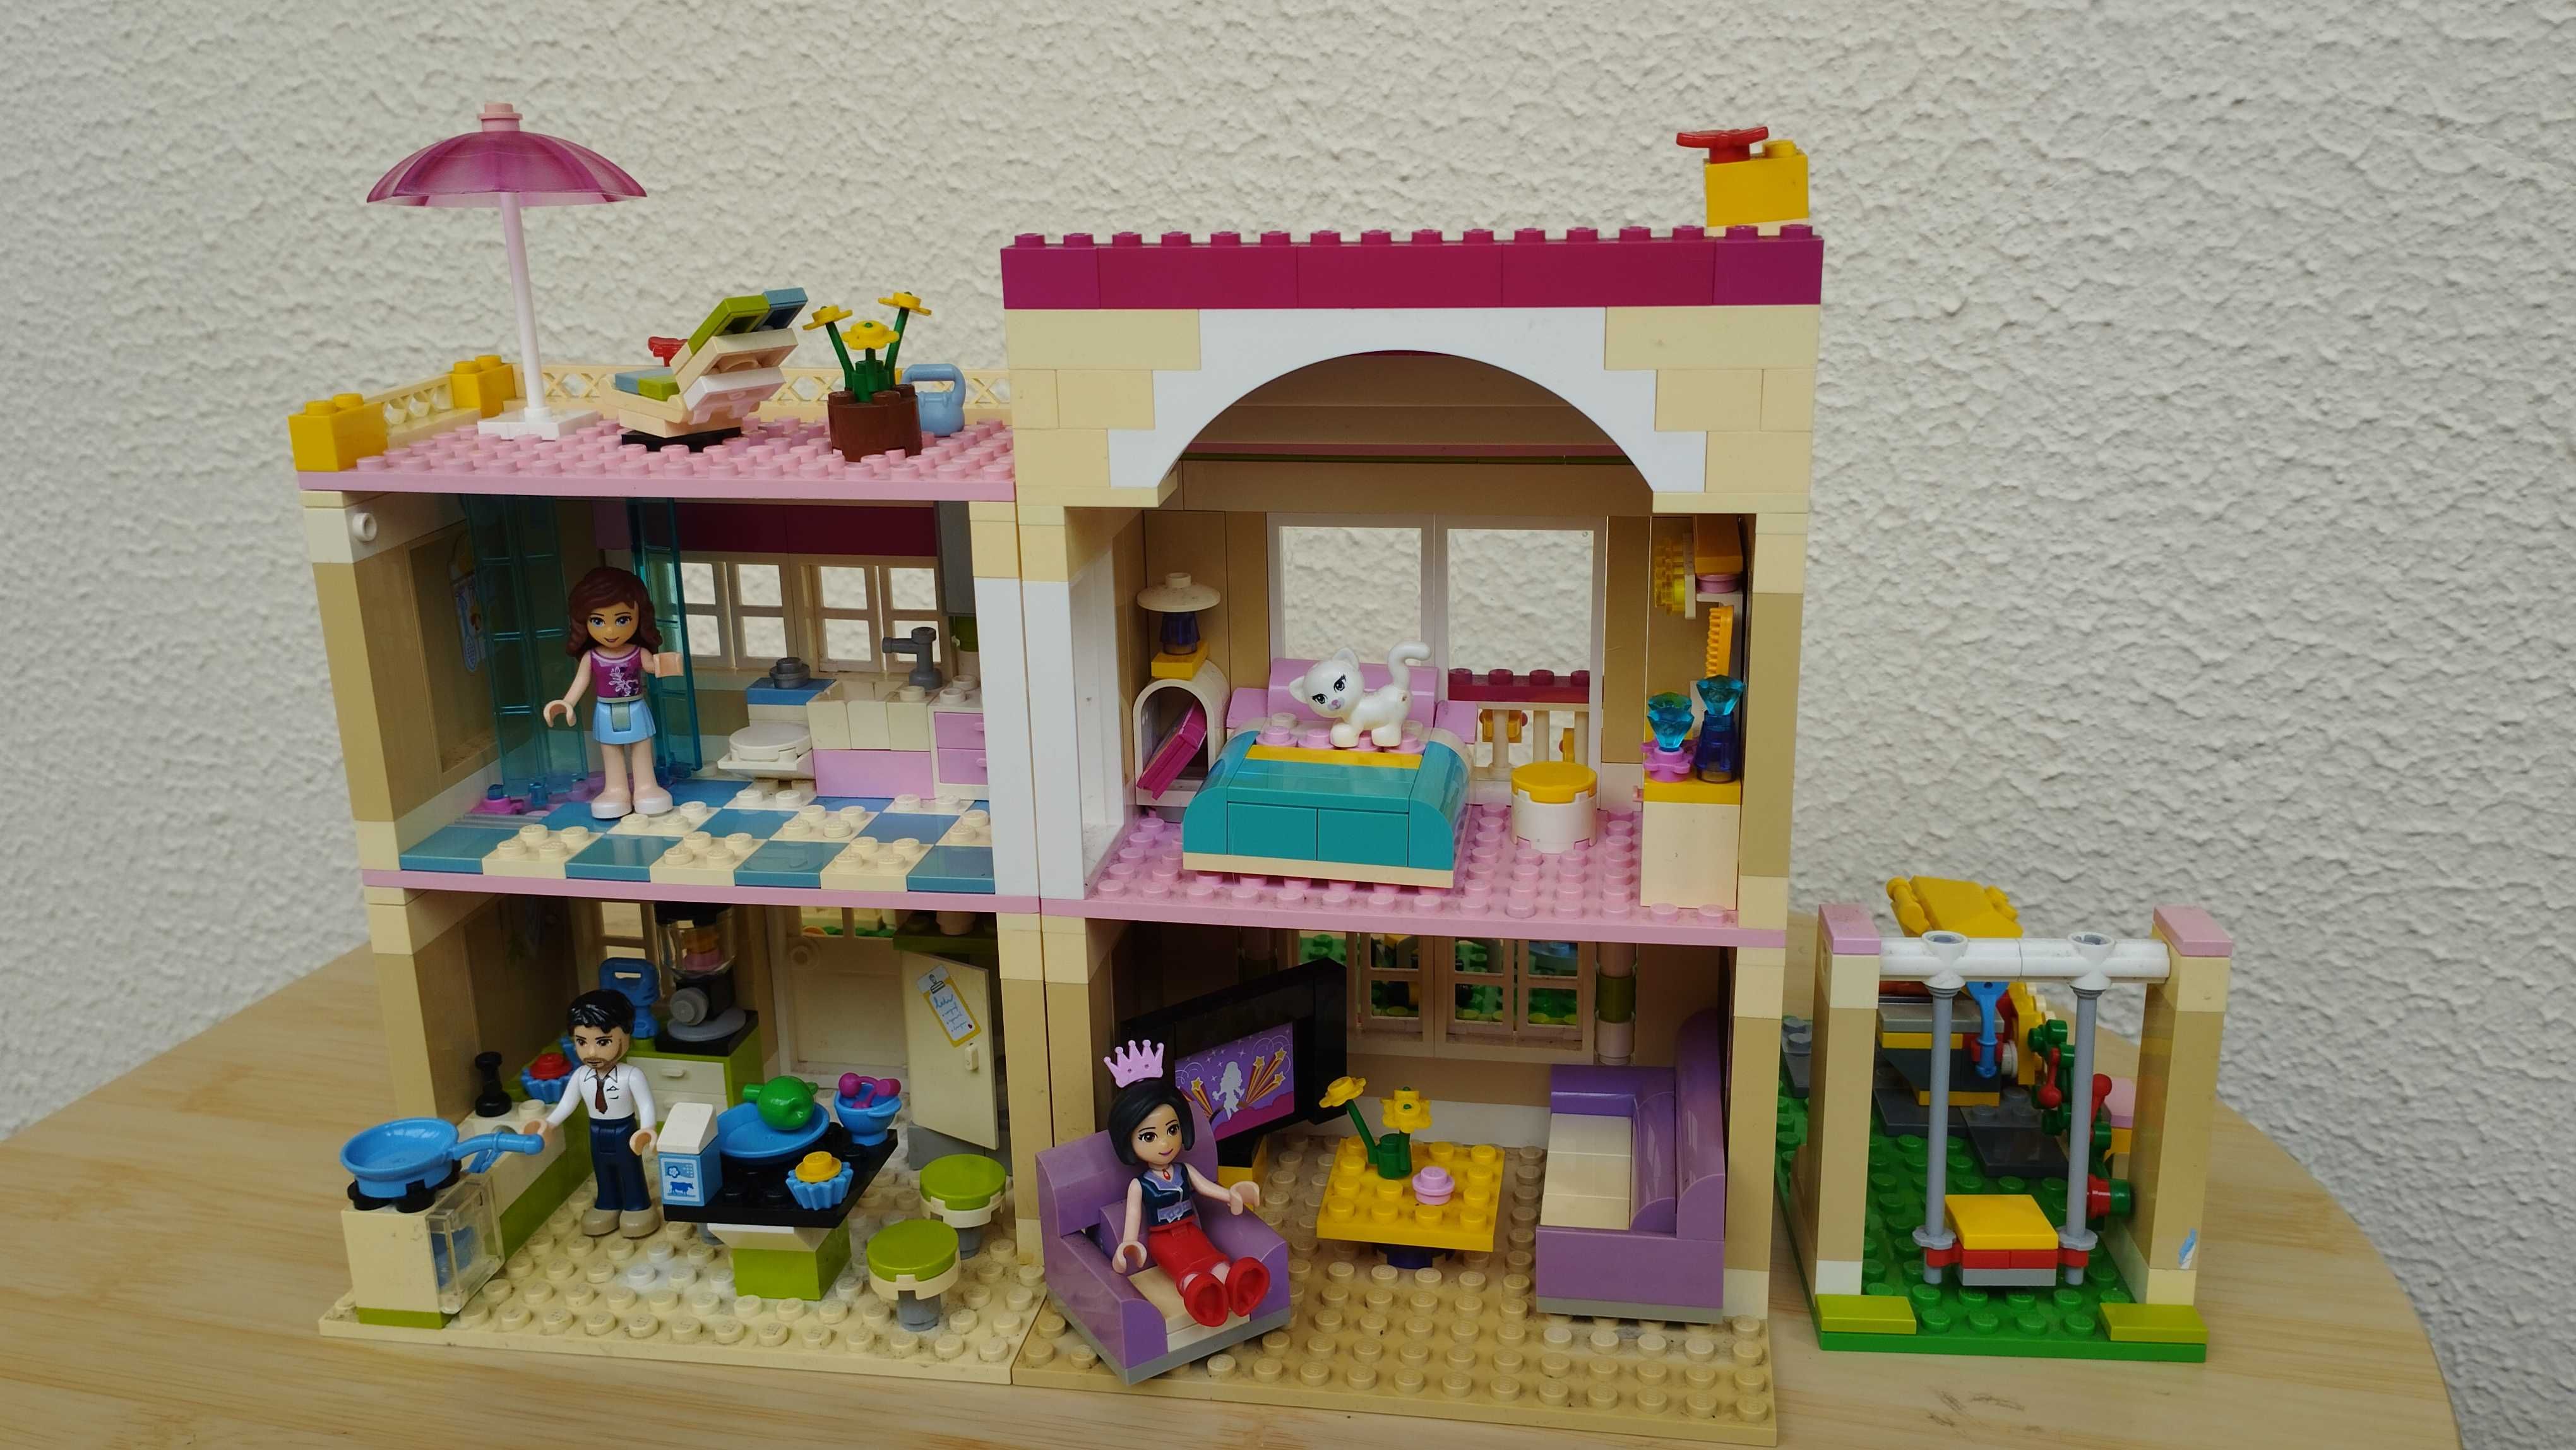 Pack LEGO FRIENDS "A Casa da Olivia" - Nº 3315, NATAL, Black Friday